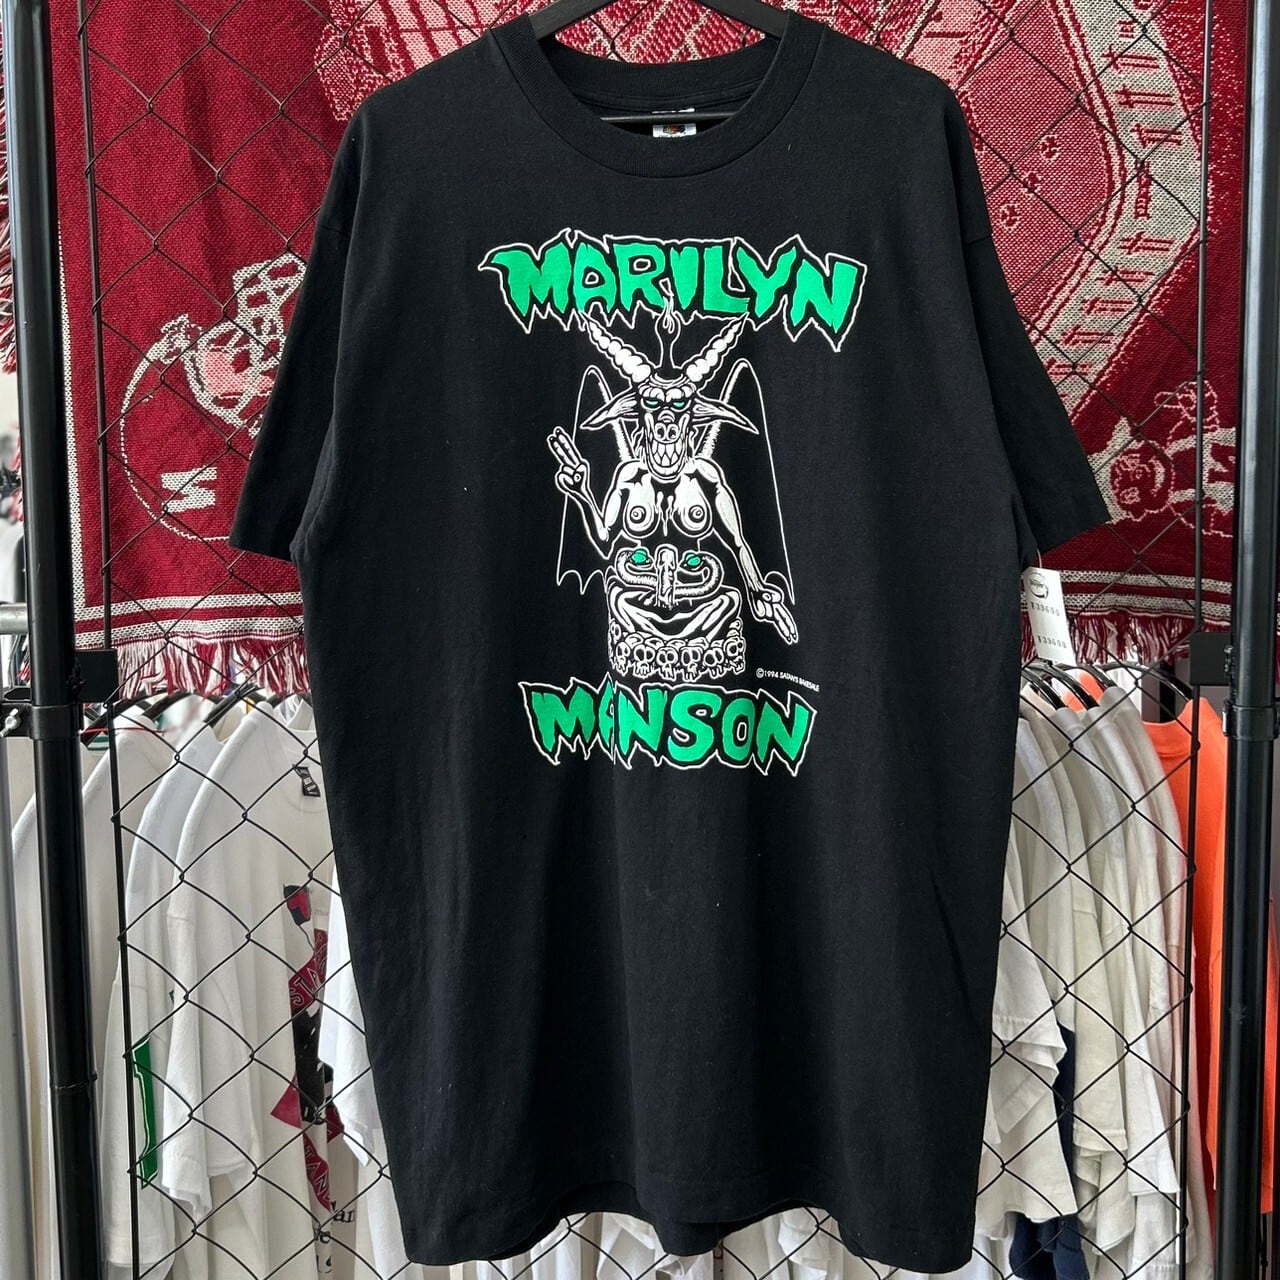 90s USA製 マリリンマンソン メタル バンド系 半袖Tシャツ デザイン